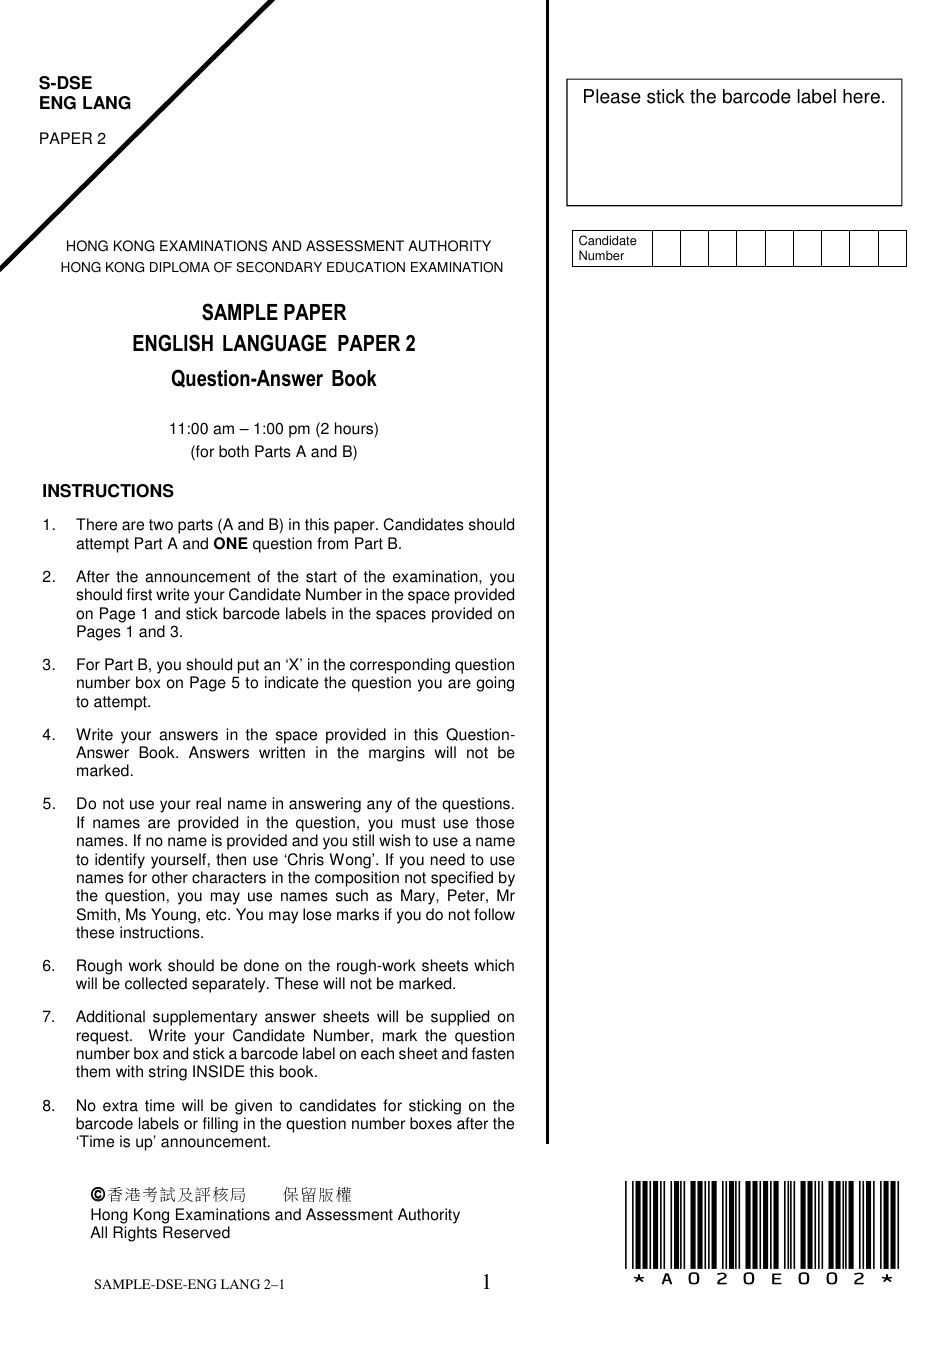 English Language Paper 2 - Question-Answer Book - Hong Kong, Page 1